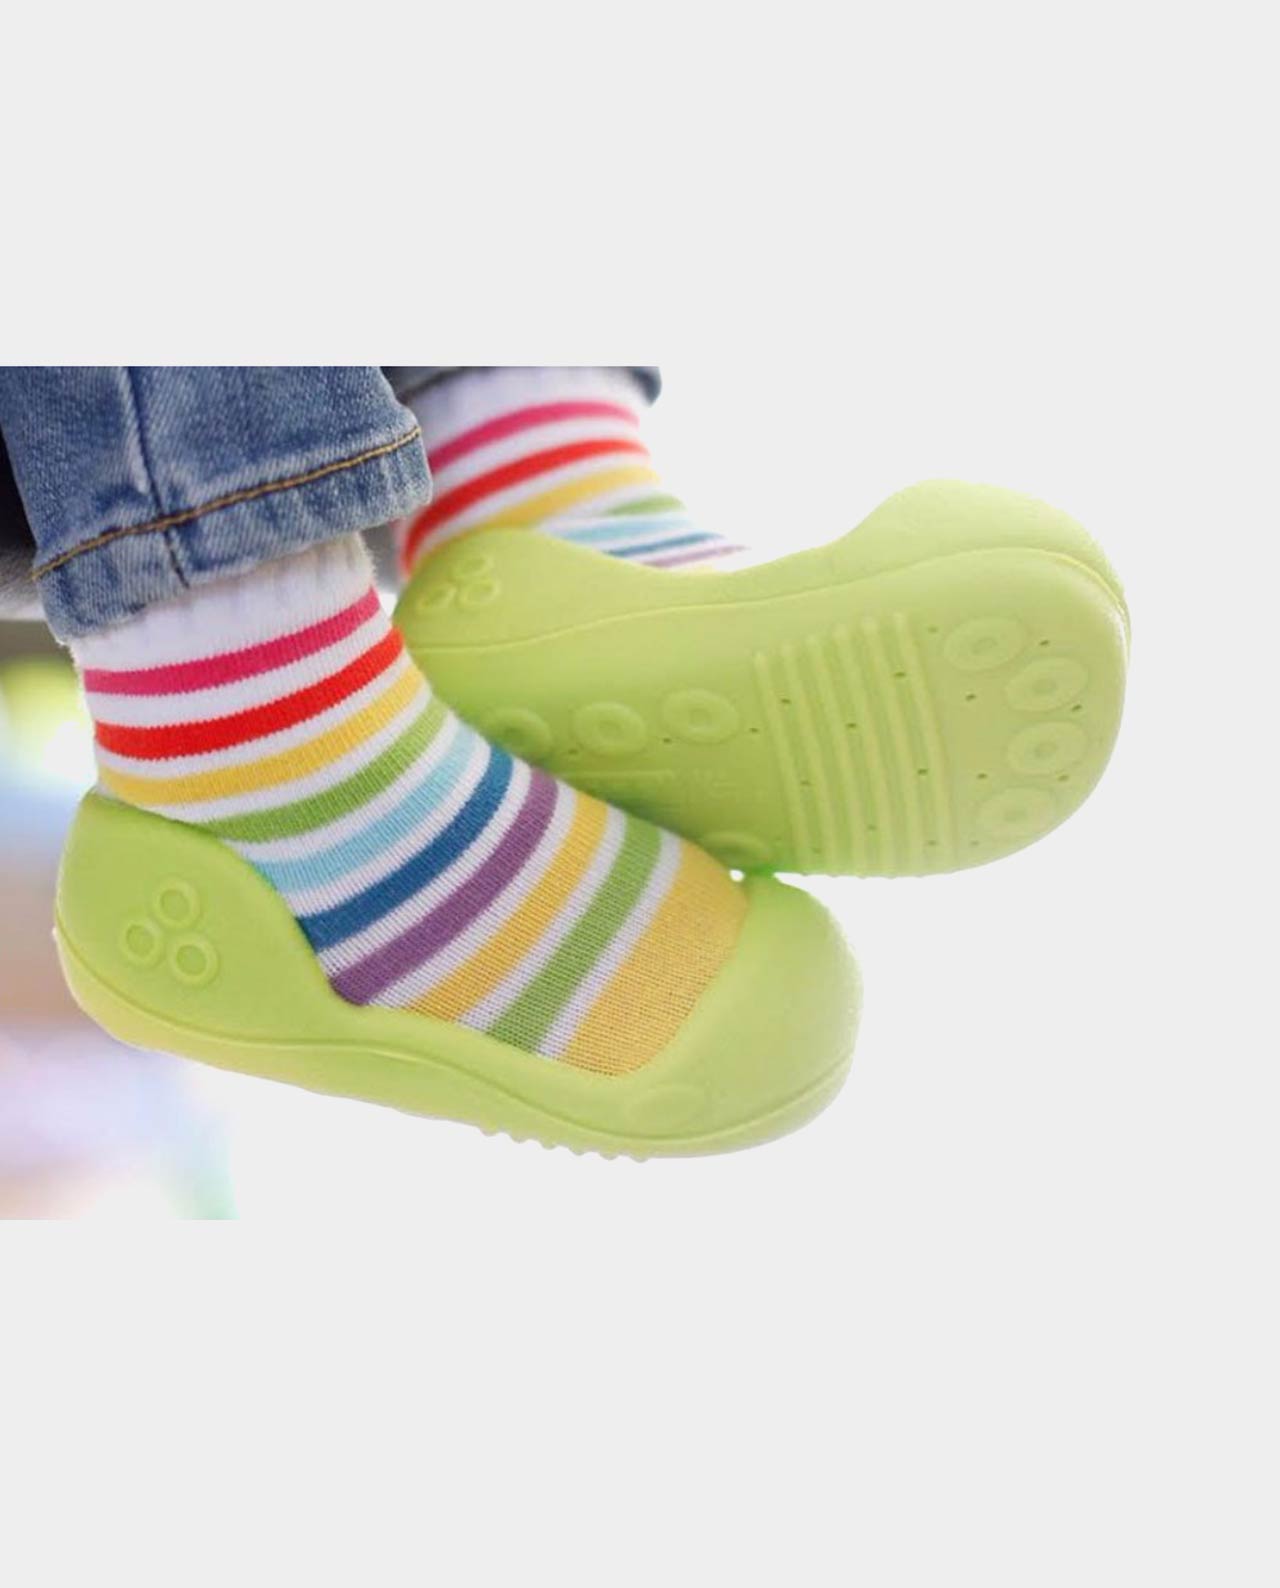 Calzado ergonómico para bebés Attipas Green - Colmena